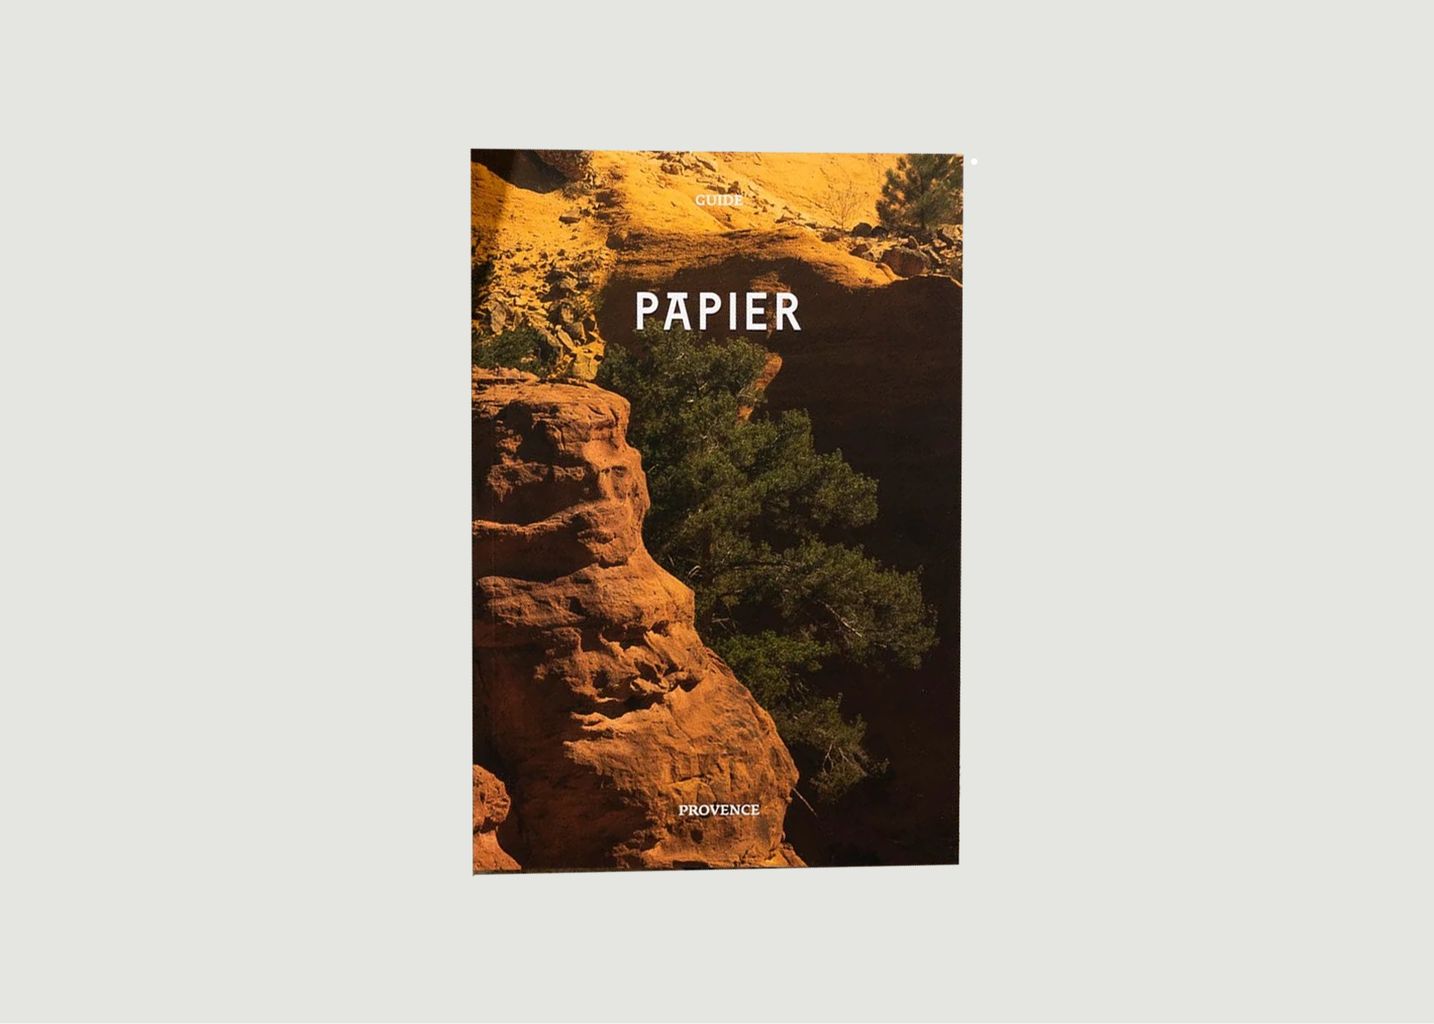 The Papier guide: The confidential guide to Provence - Les éditions papier